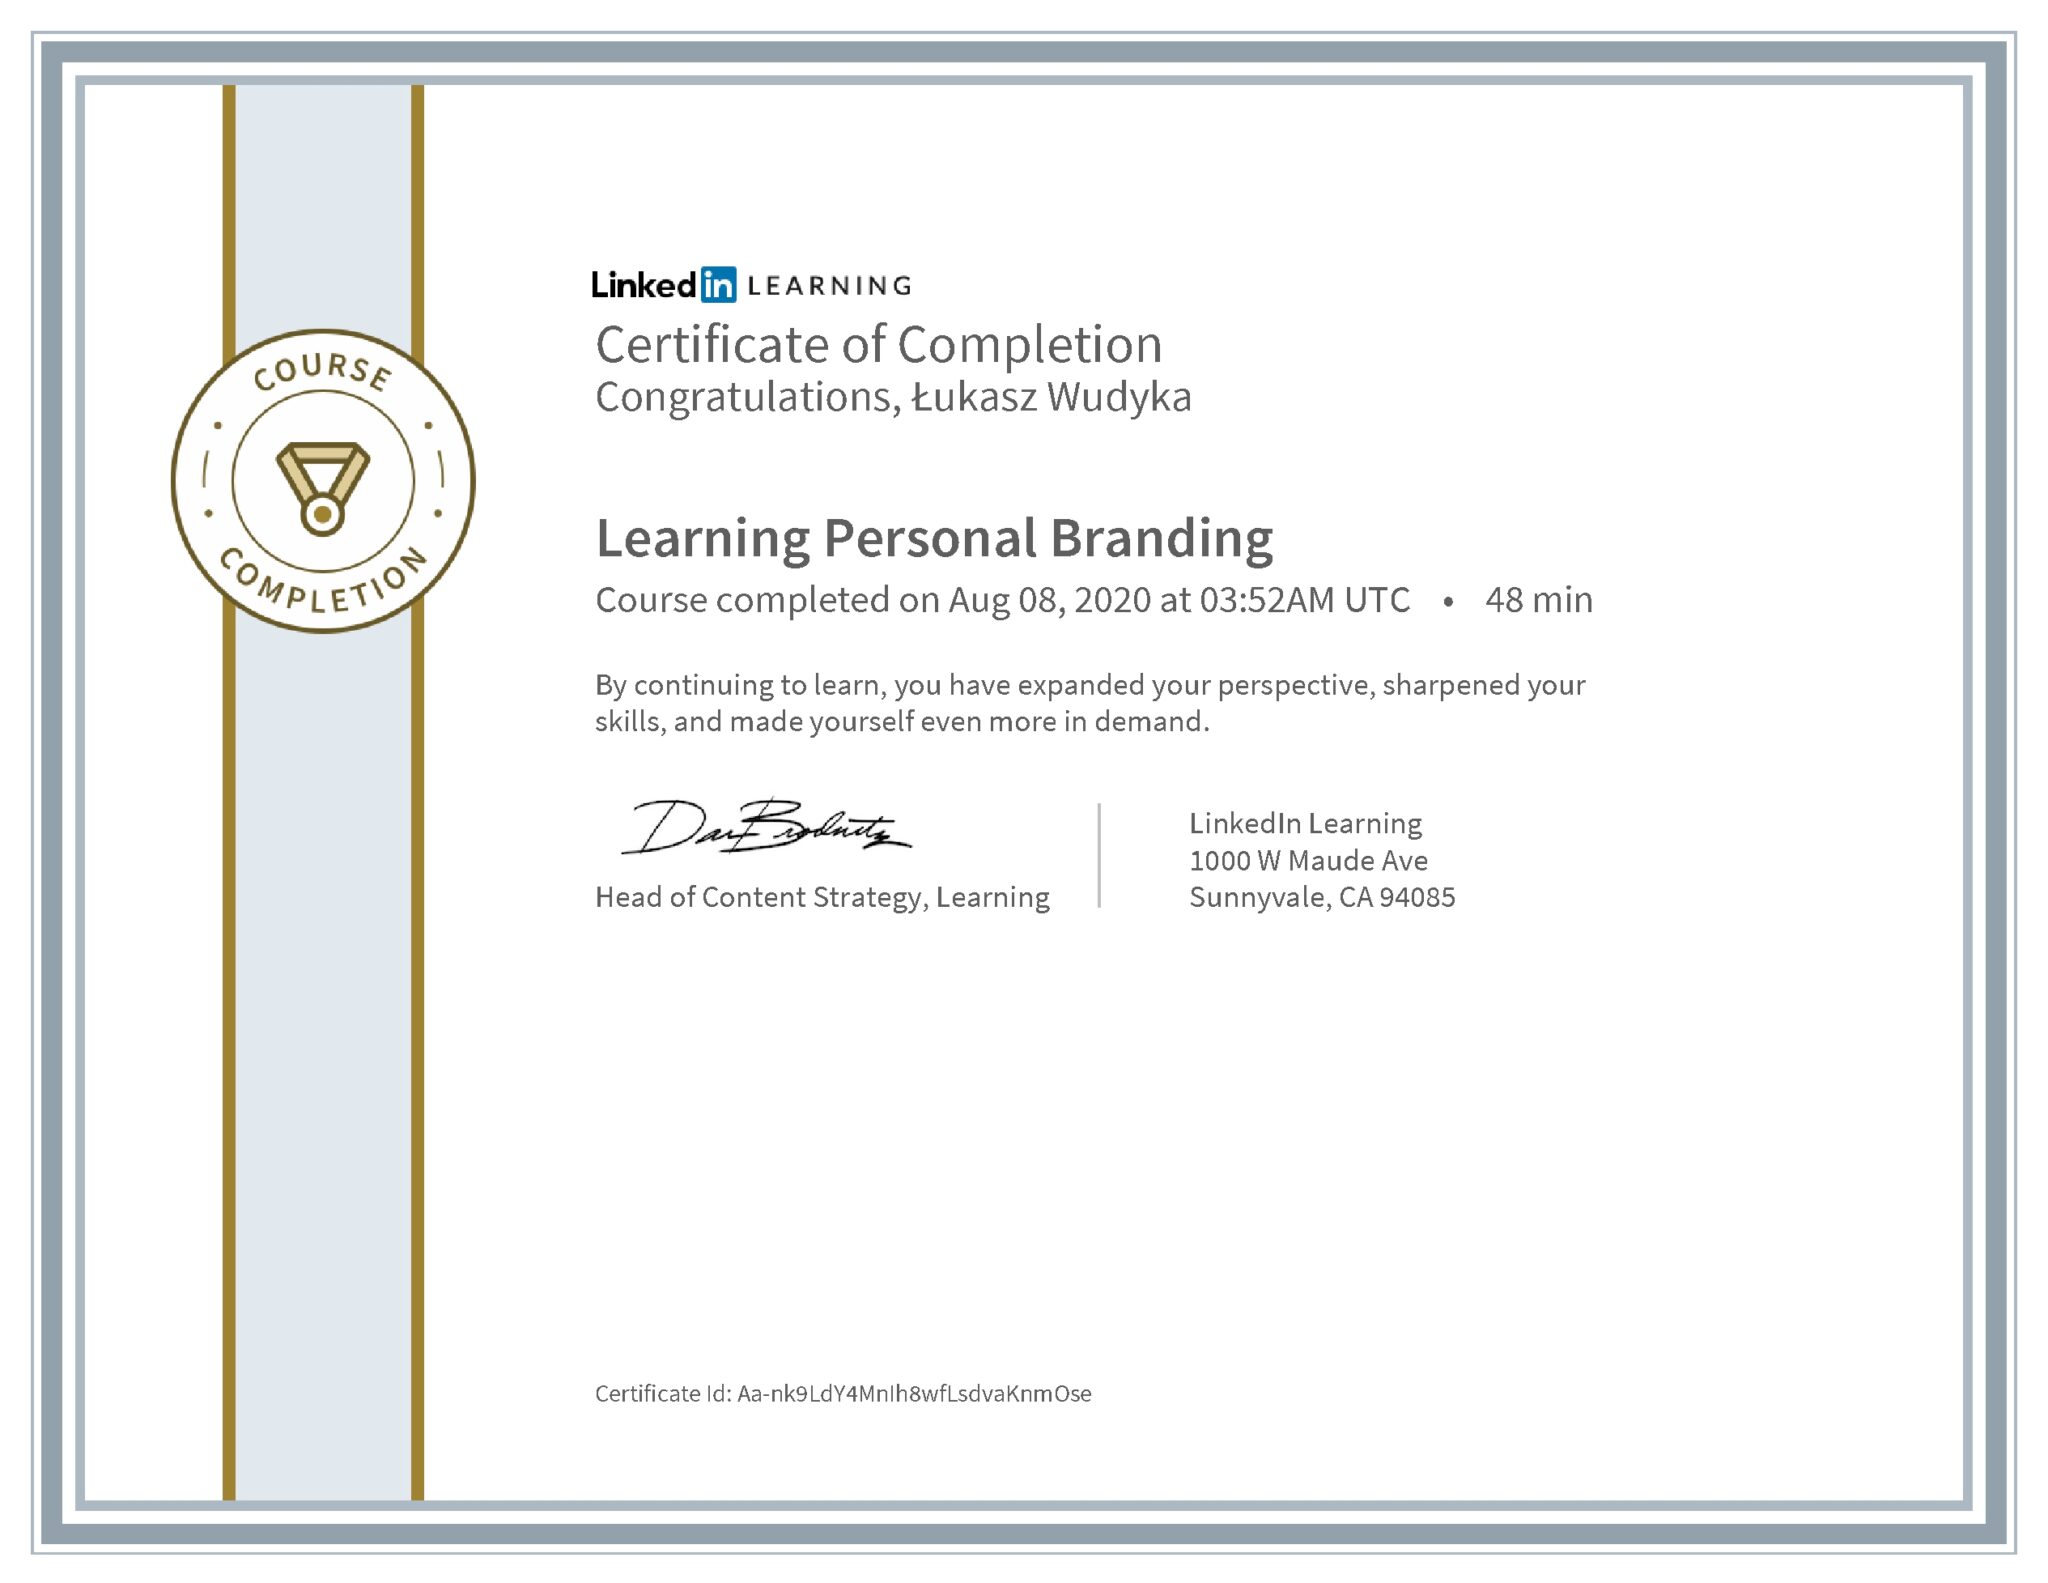 Łukasz Wudyka certyfikat LinkedIn Learning Personal Branding